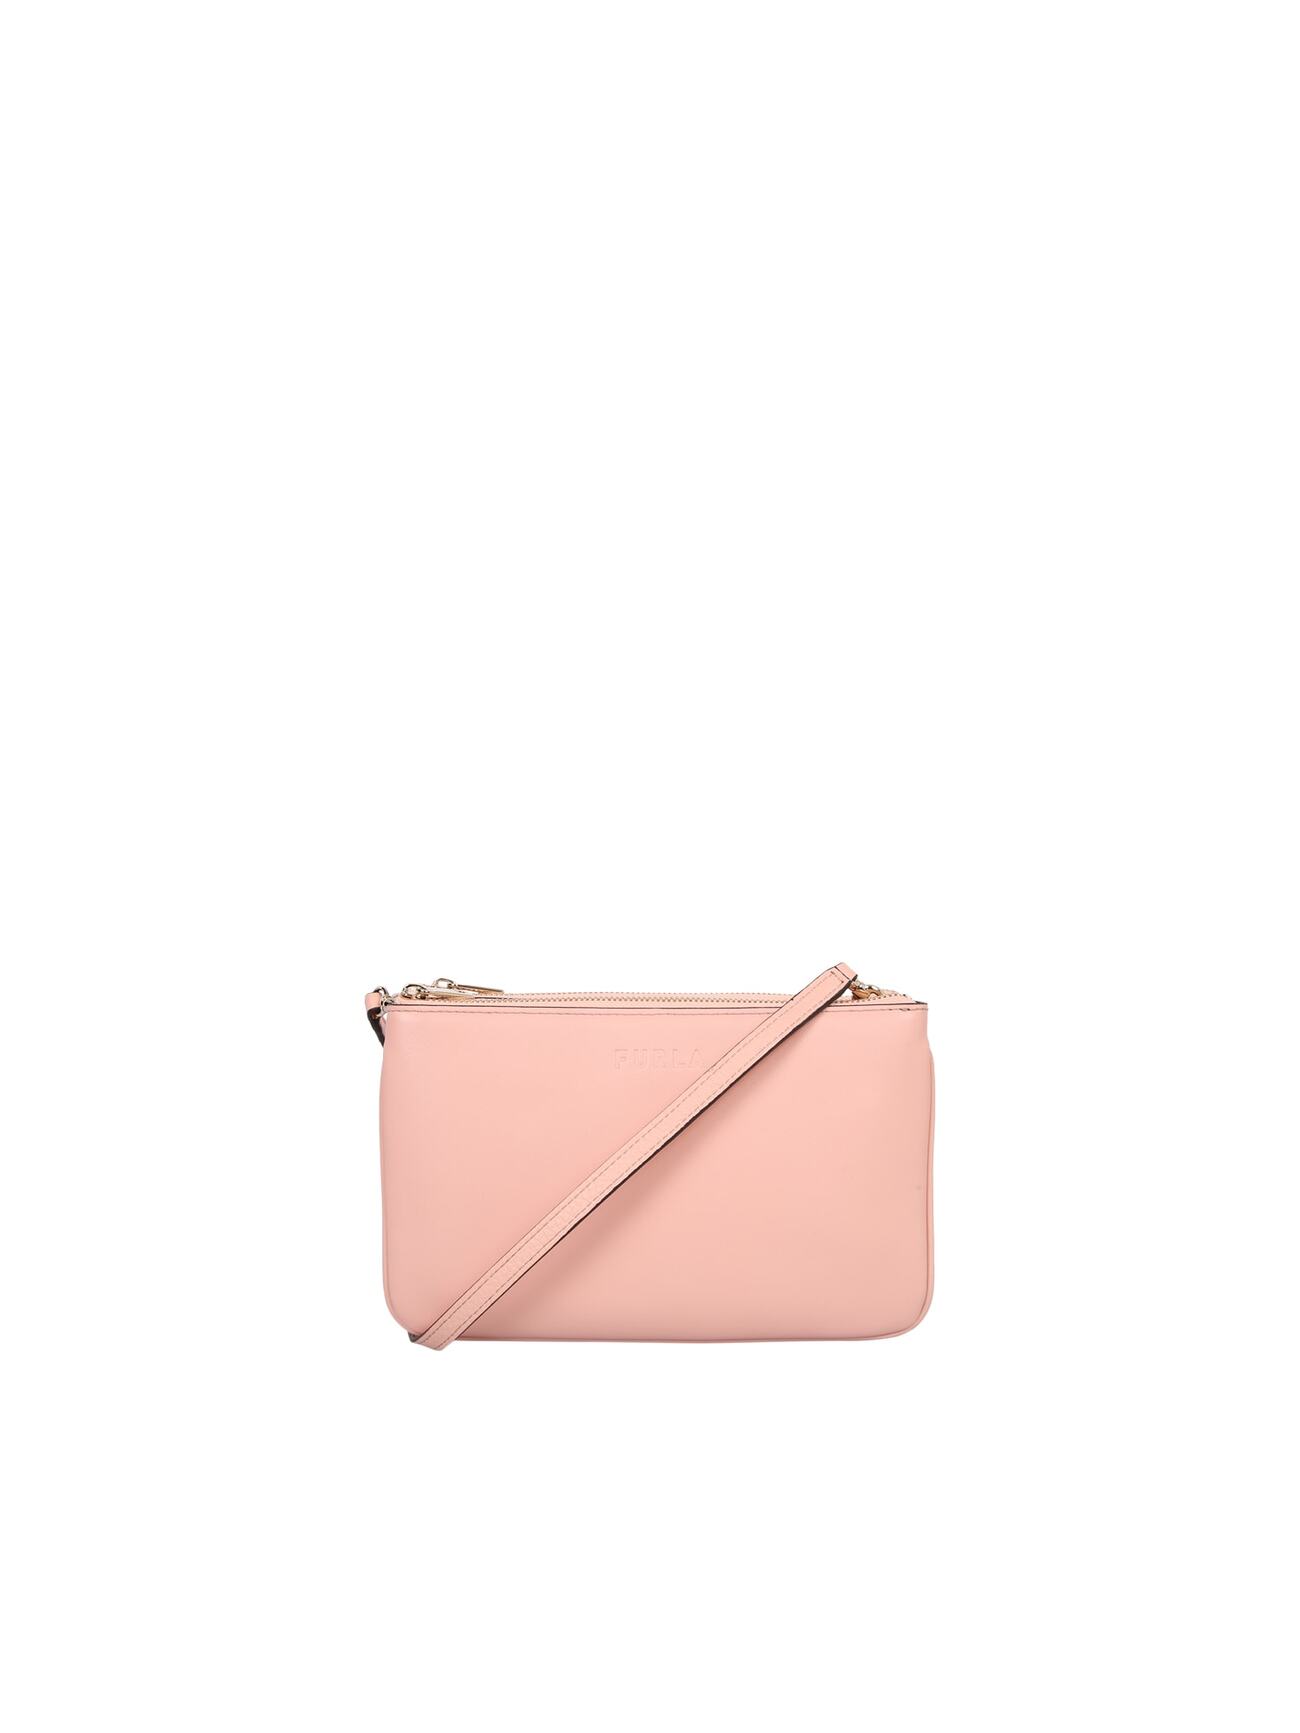 Furla Miastella Mini Bag in pink